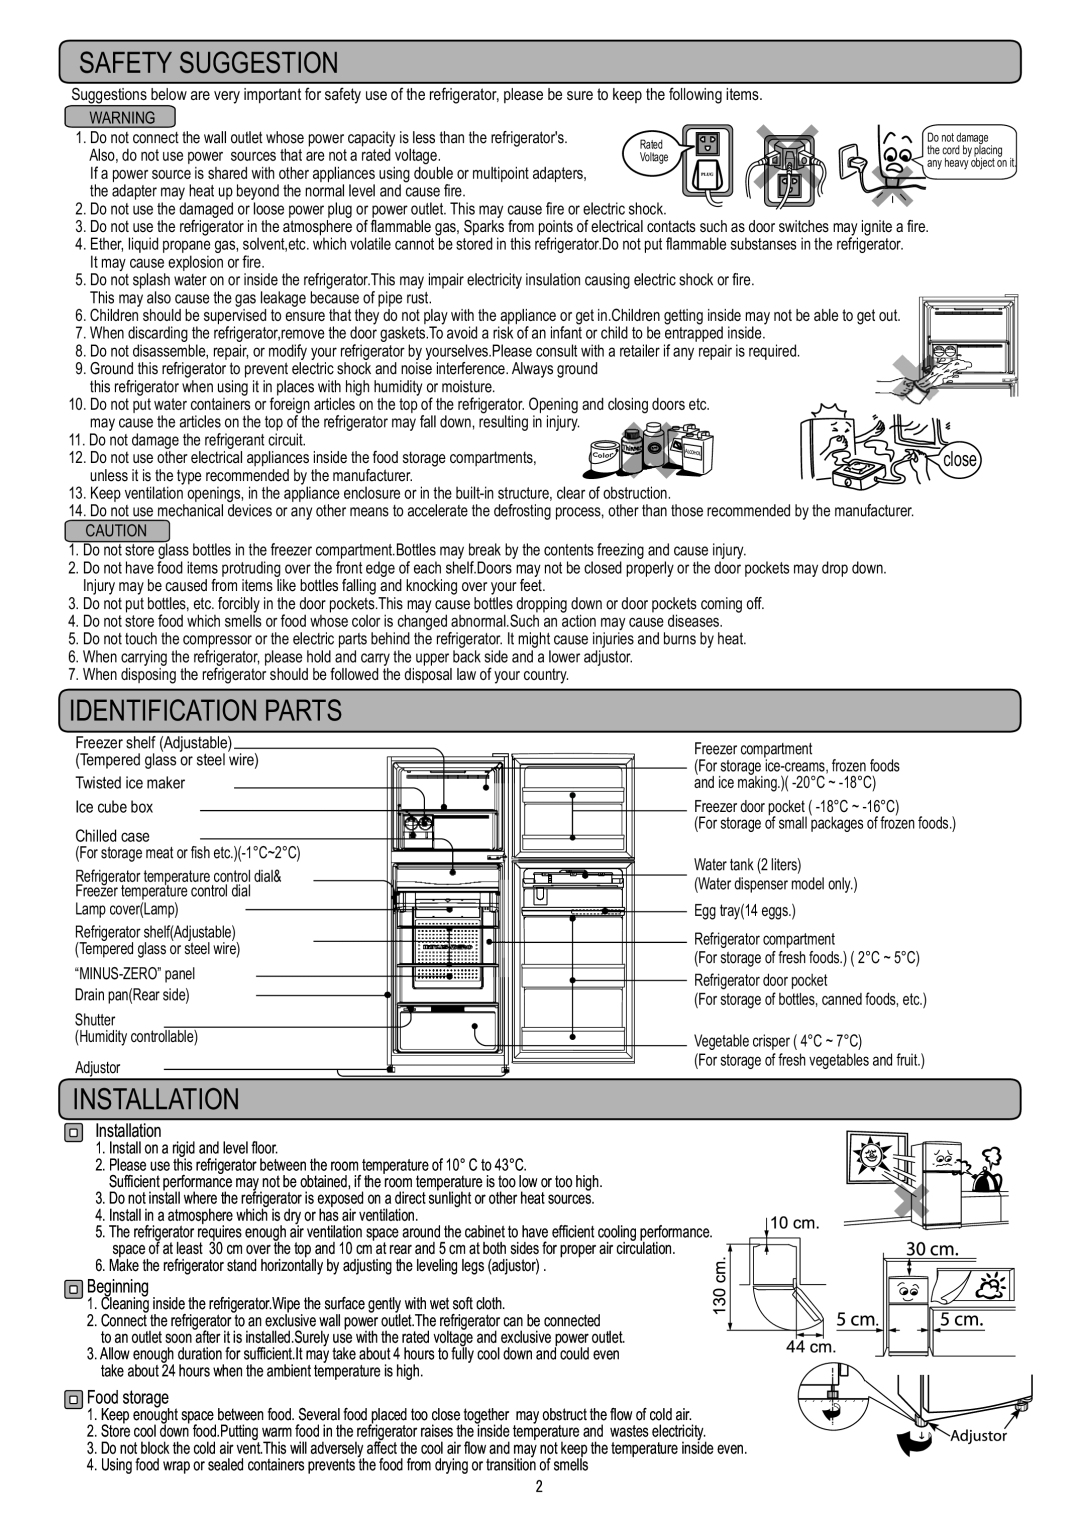 Hitachi R-Z440END9K(X), R-Z451EMS(X), R-Z460EM(X) manual Safety Suggestion, Identification Parts, Installation, Food storage 